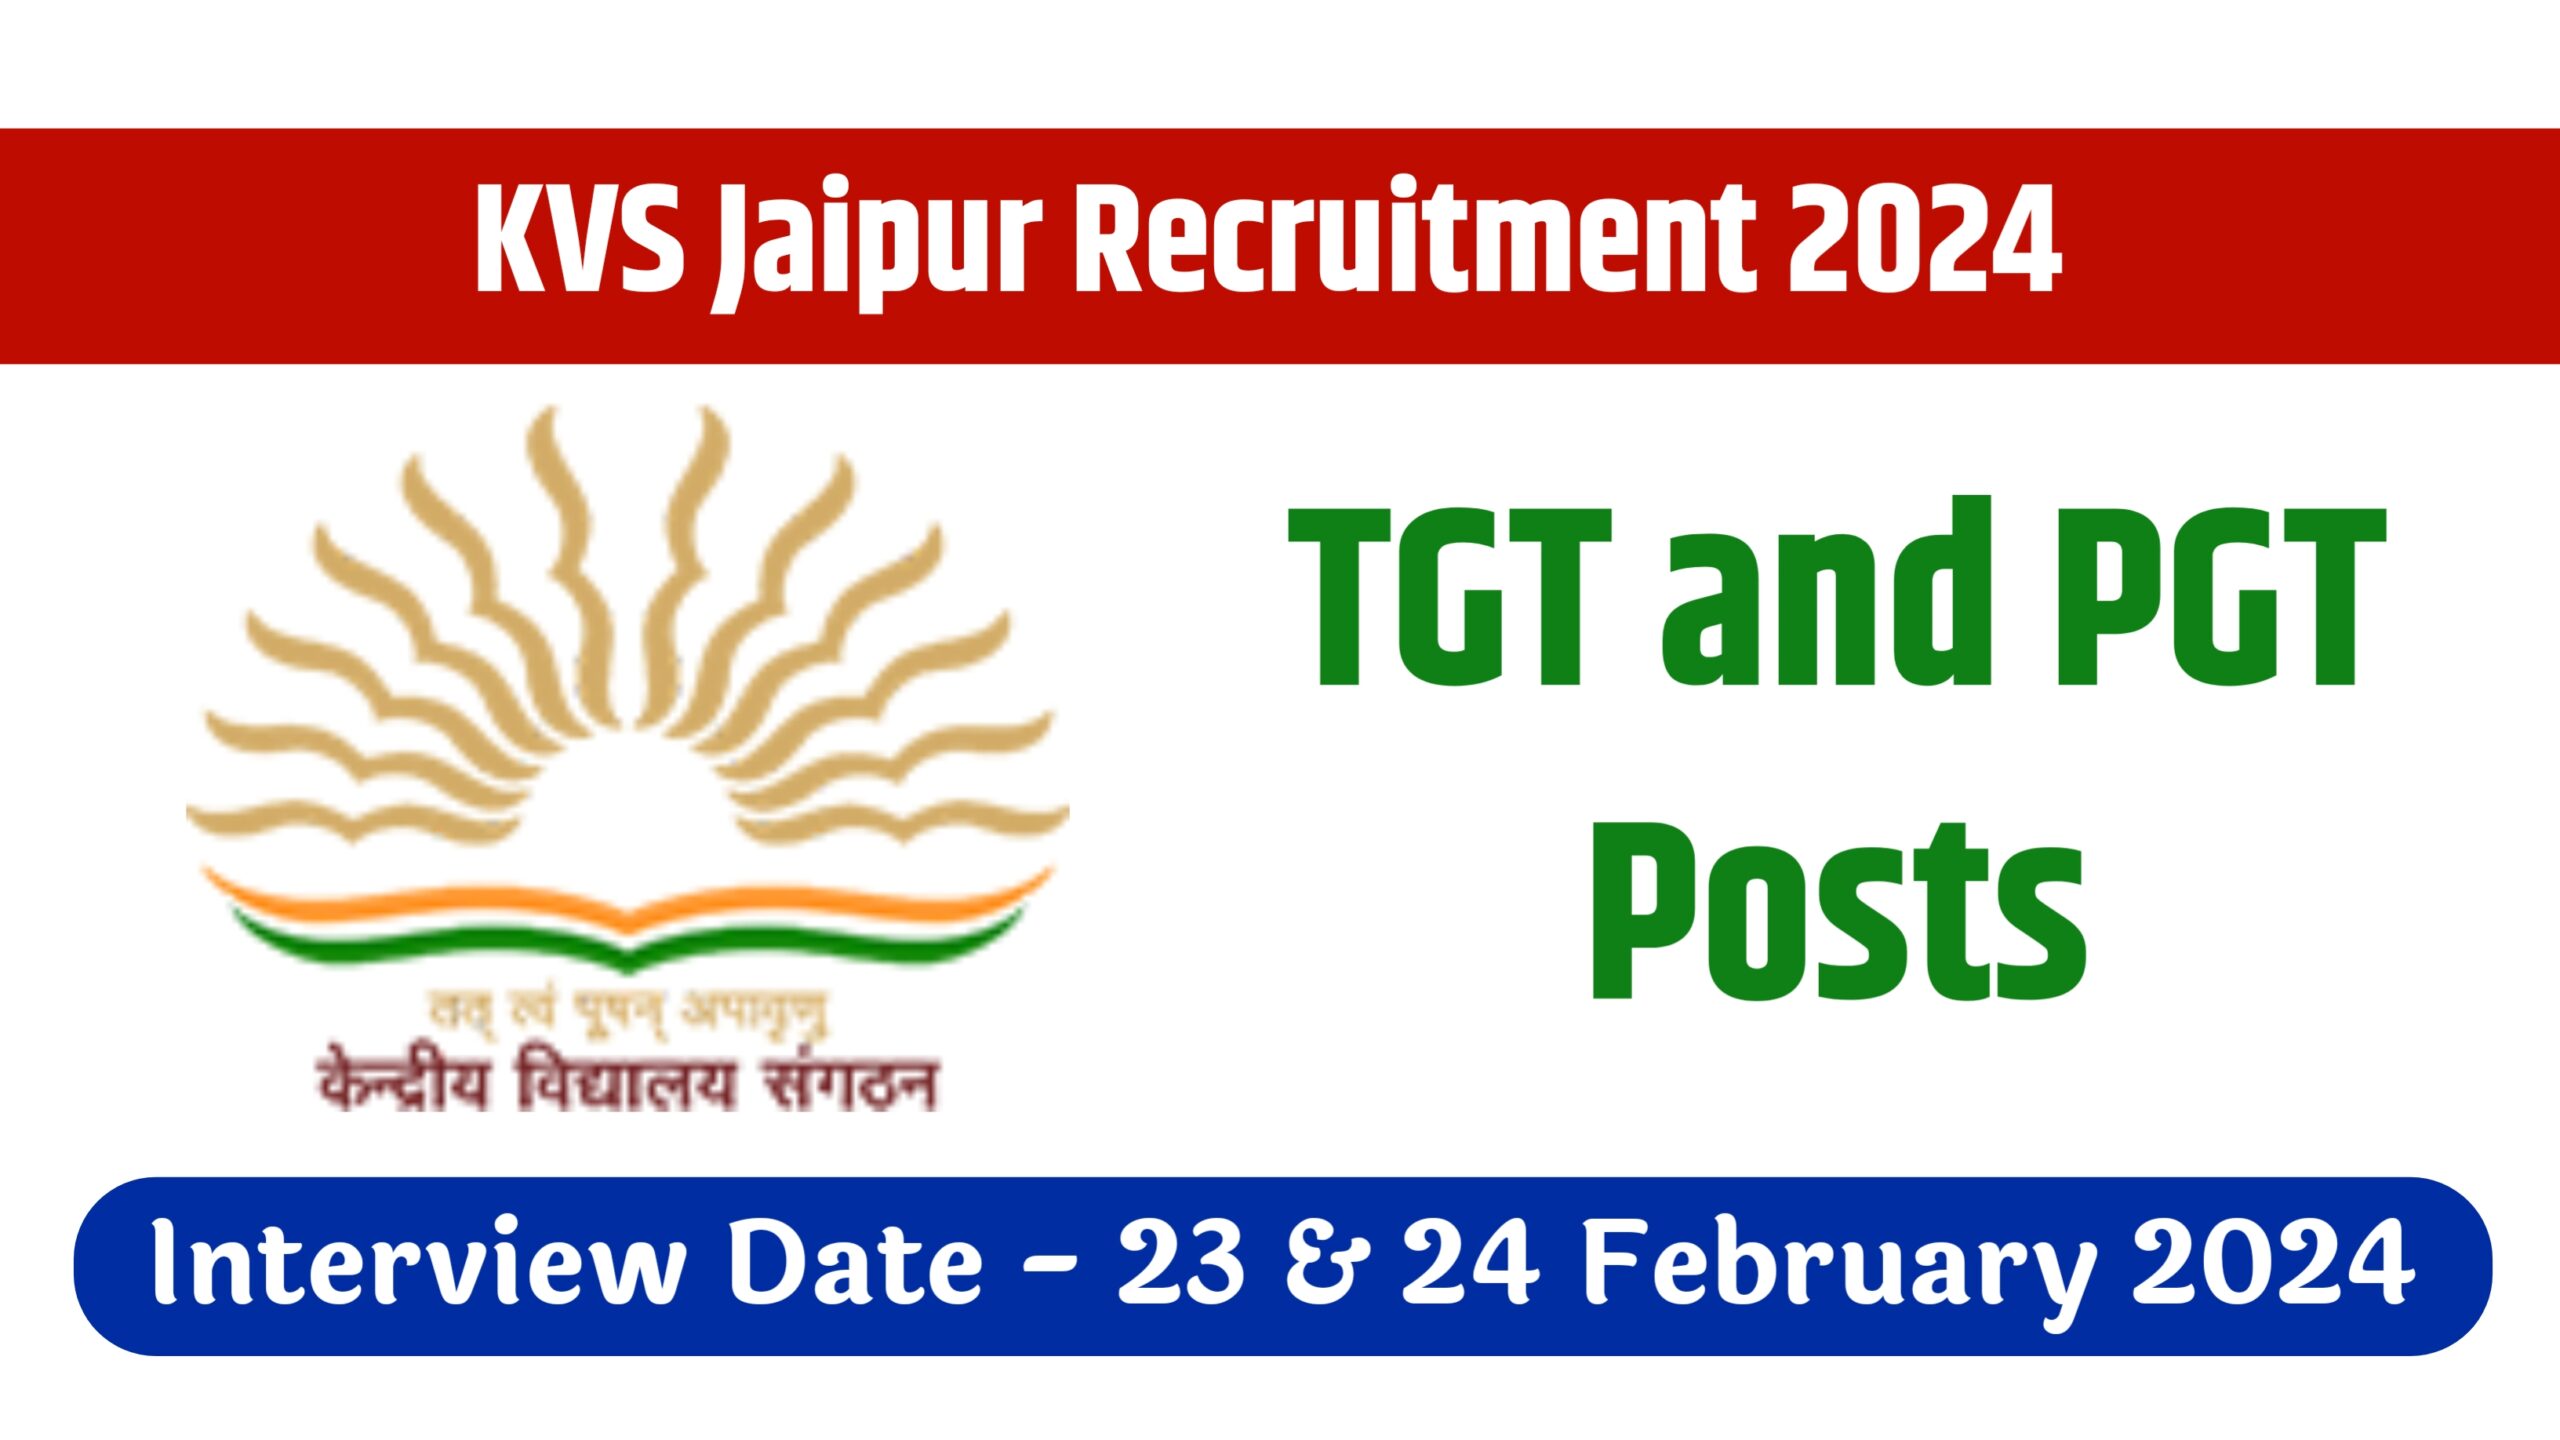 KVS Jaipur Recruitment 2024